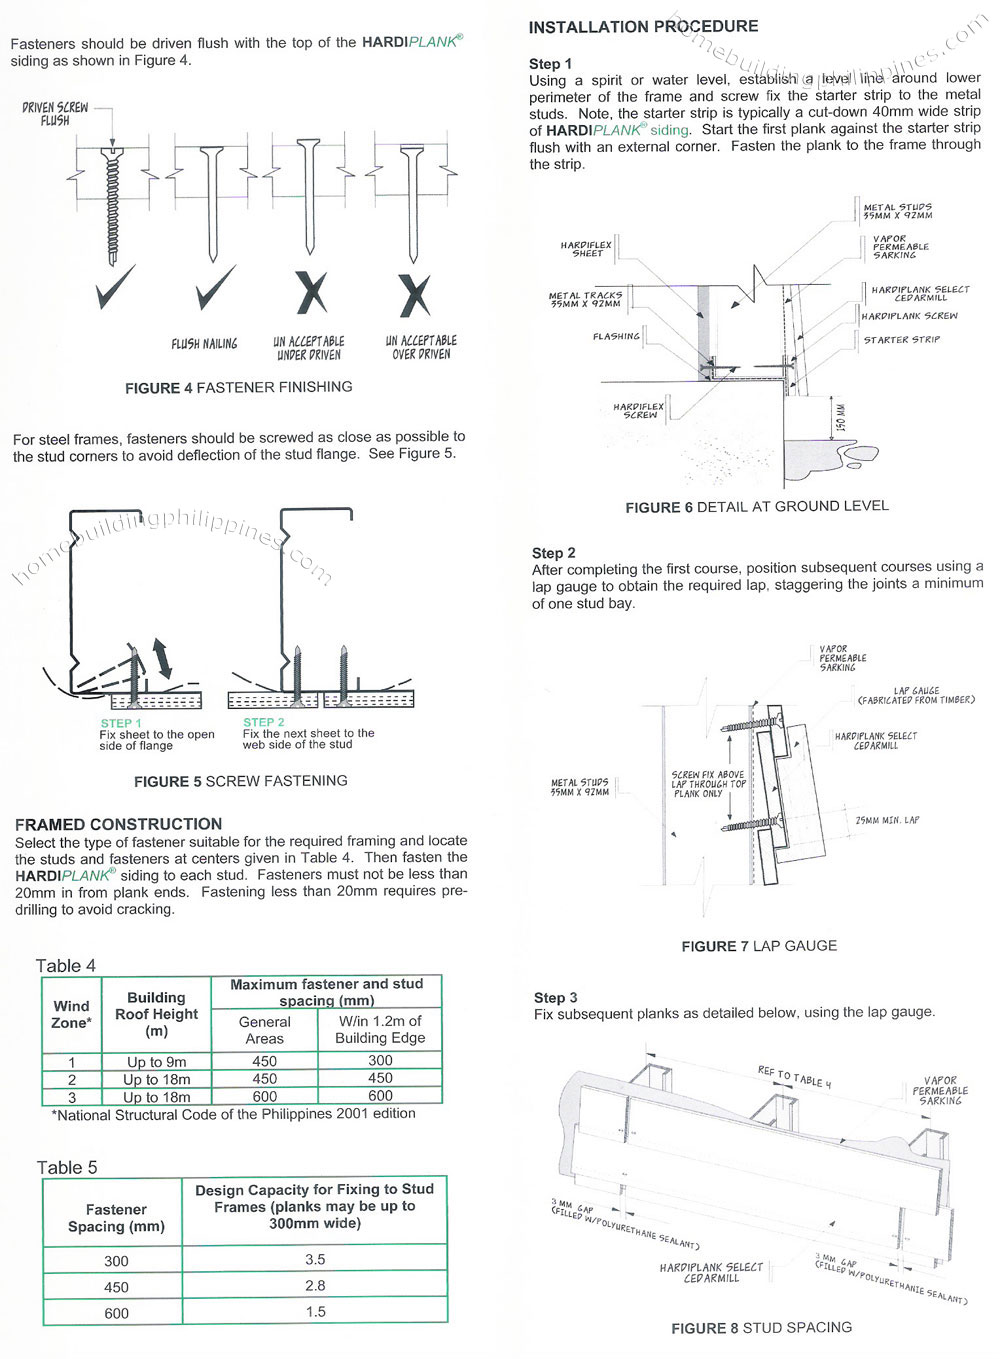 HardiePlank Durable Siding Board Installation Manual